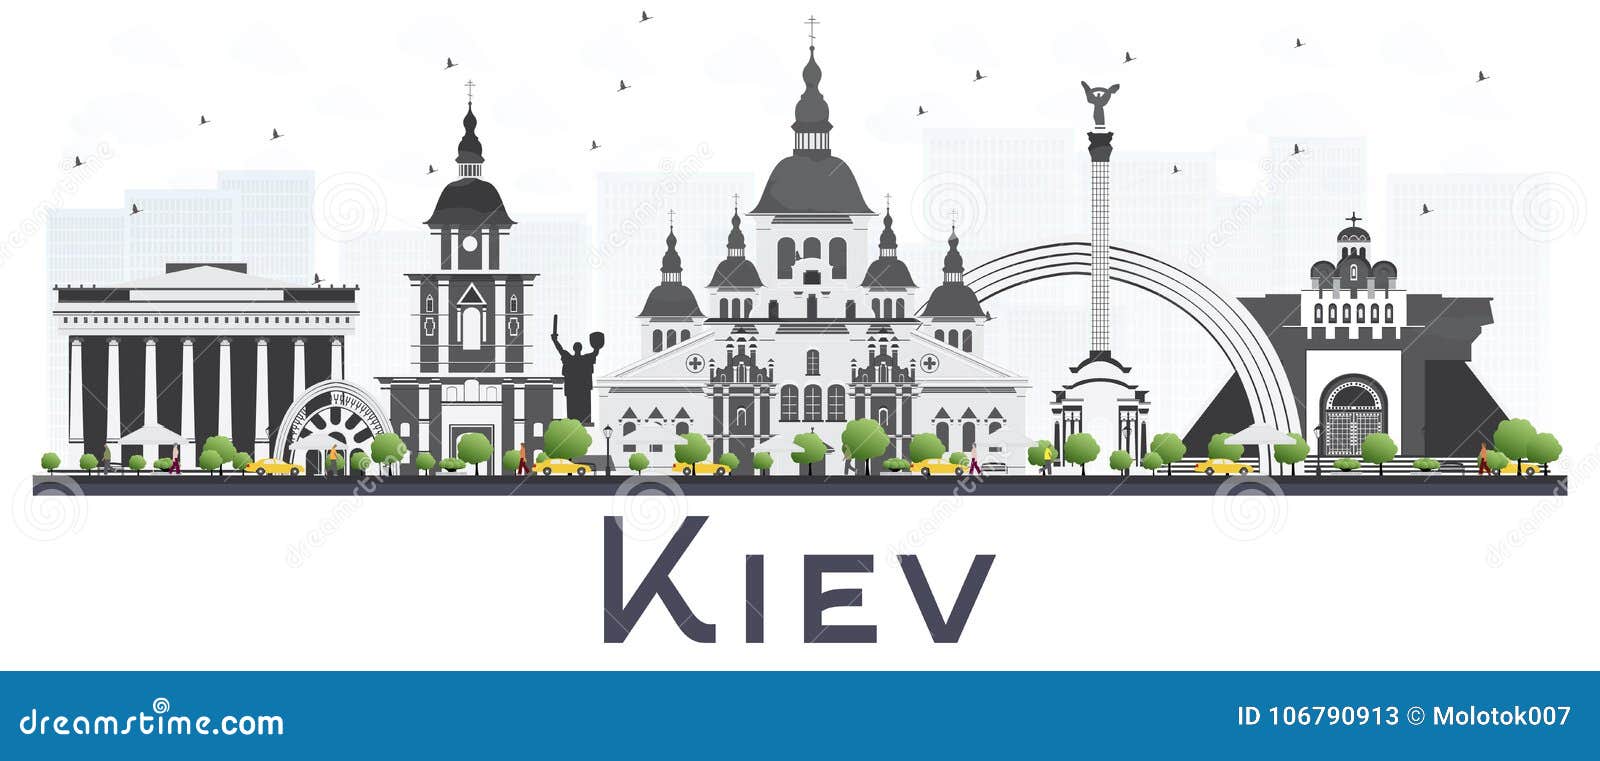 kiev ukraine city skyline with gray buildings  on white